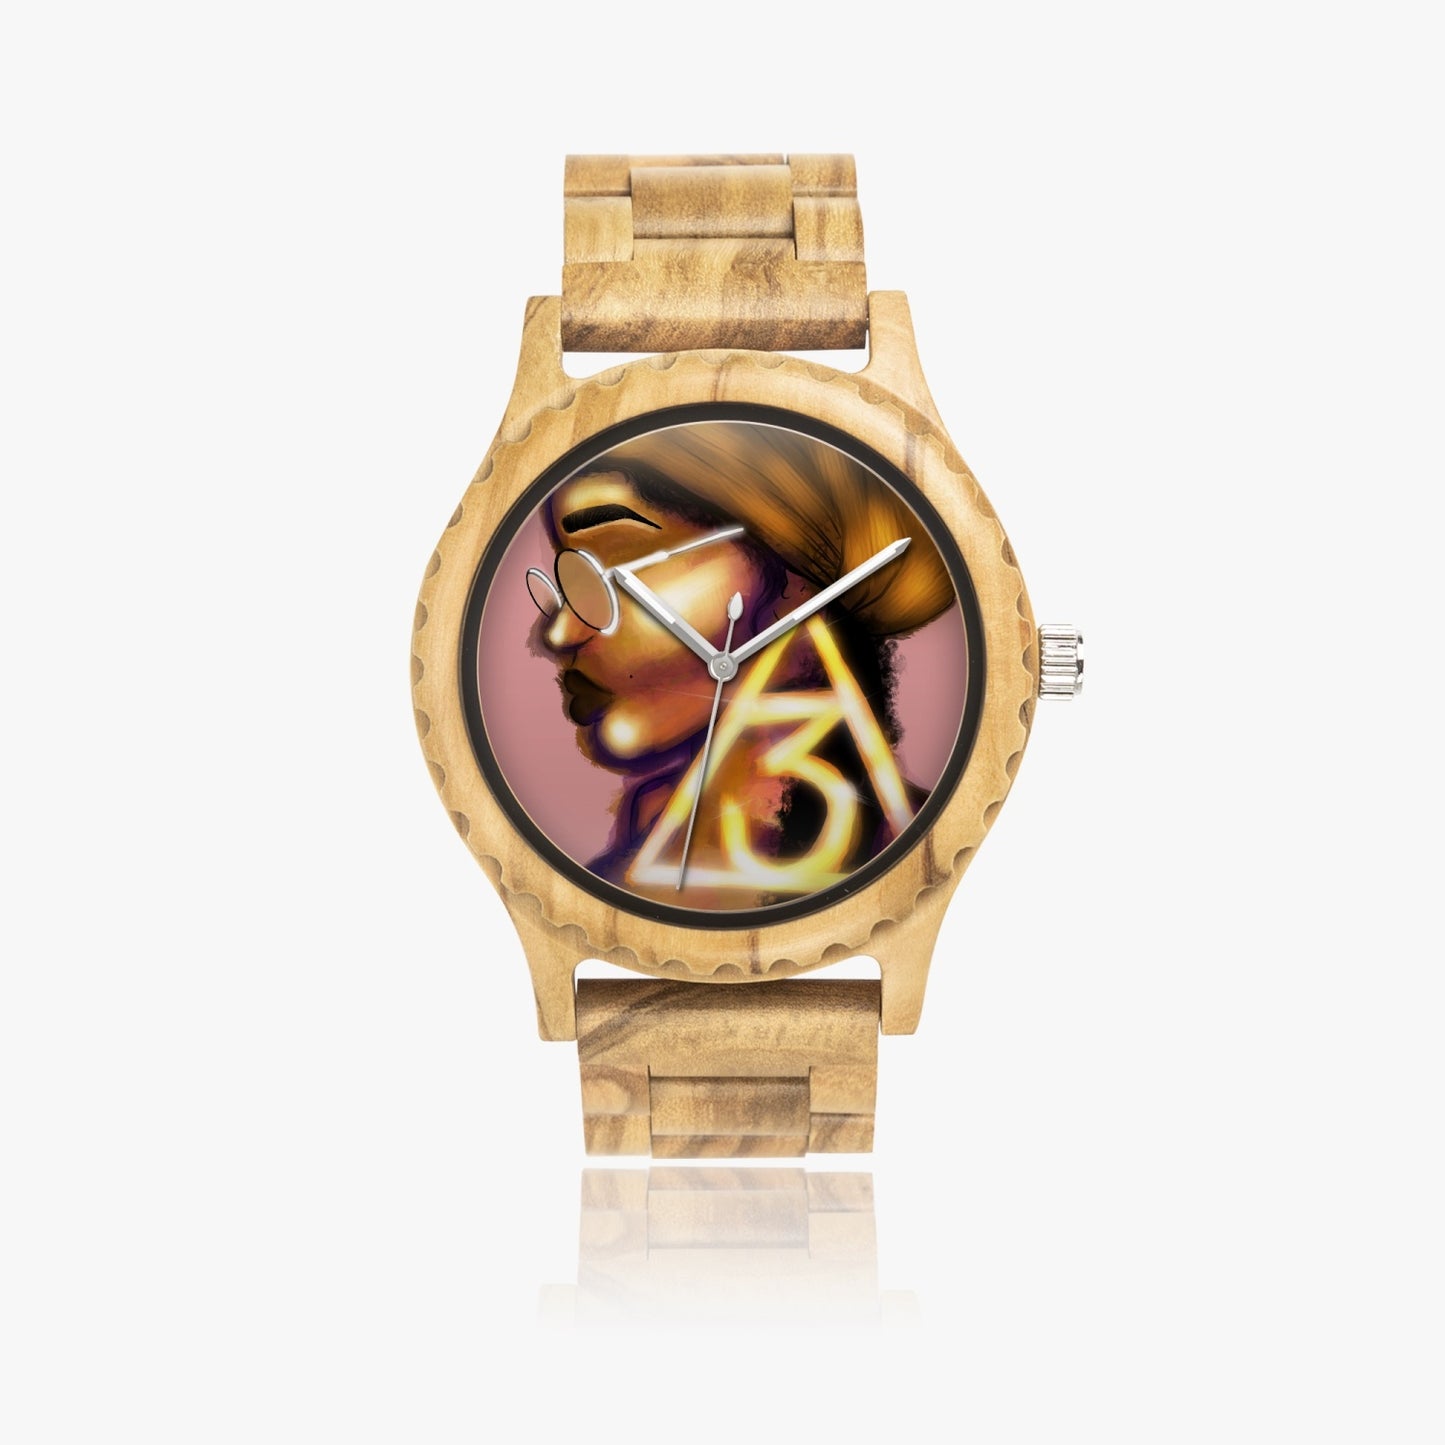 206. Italian Olive Lumber Wooden Watch